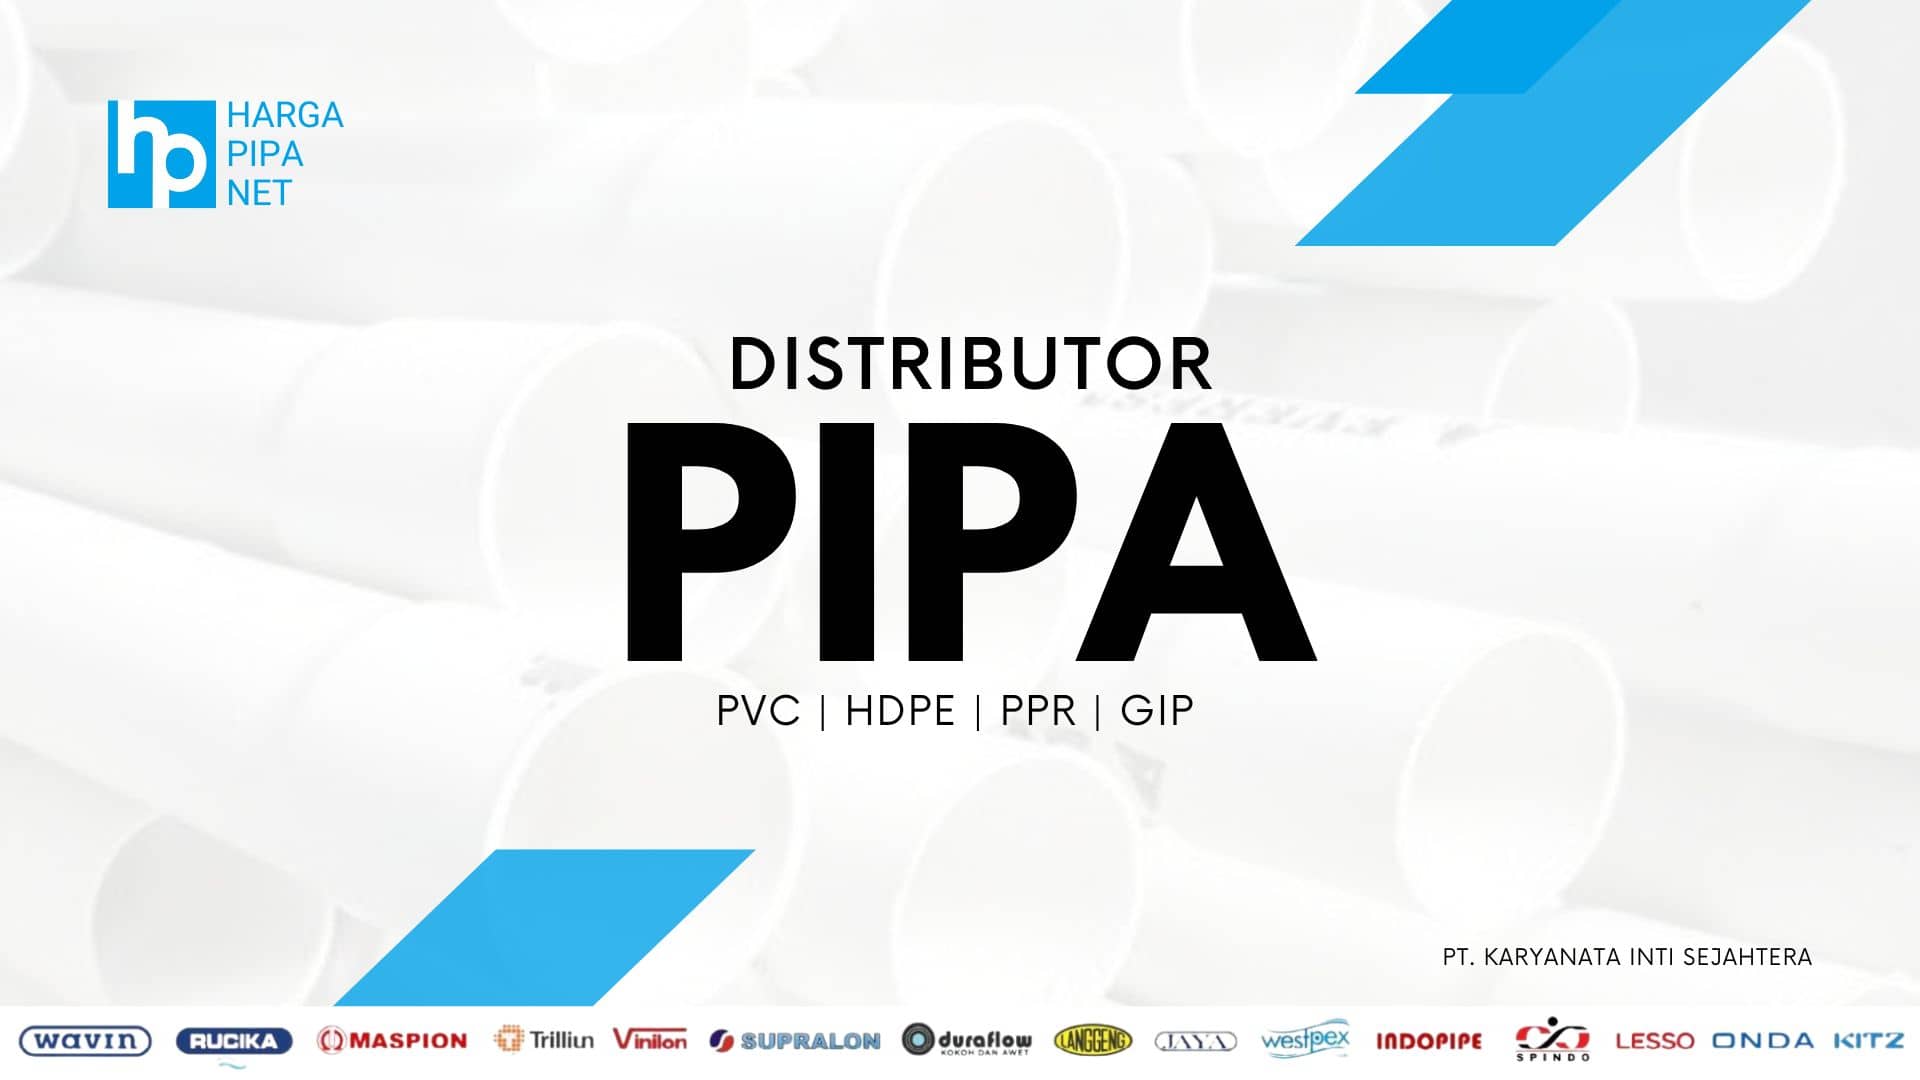 Harga Pipa PVC 2 Inch